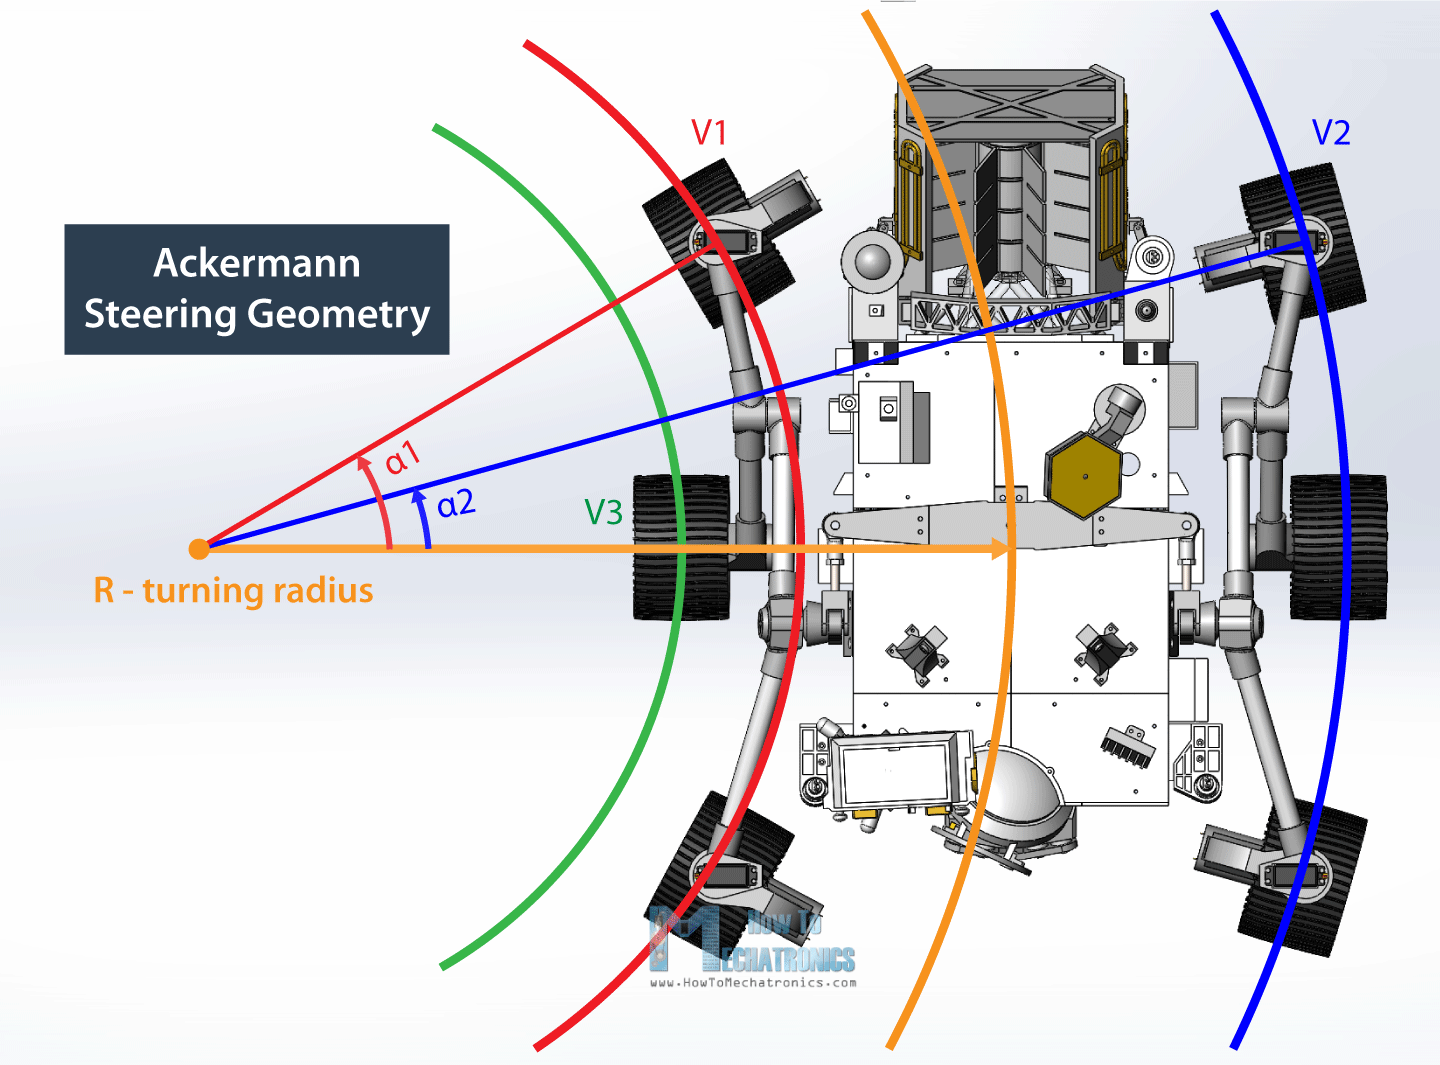 Ackermann Steering Geometry for Mars Rover with rocker-bogie suspension